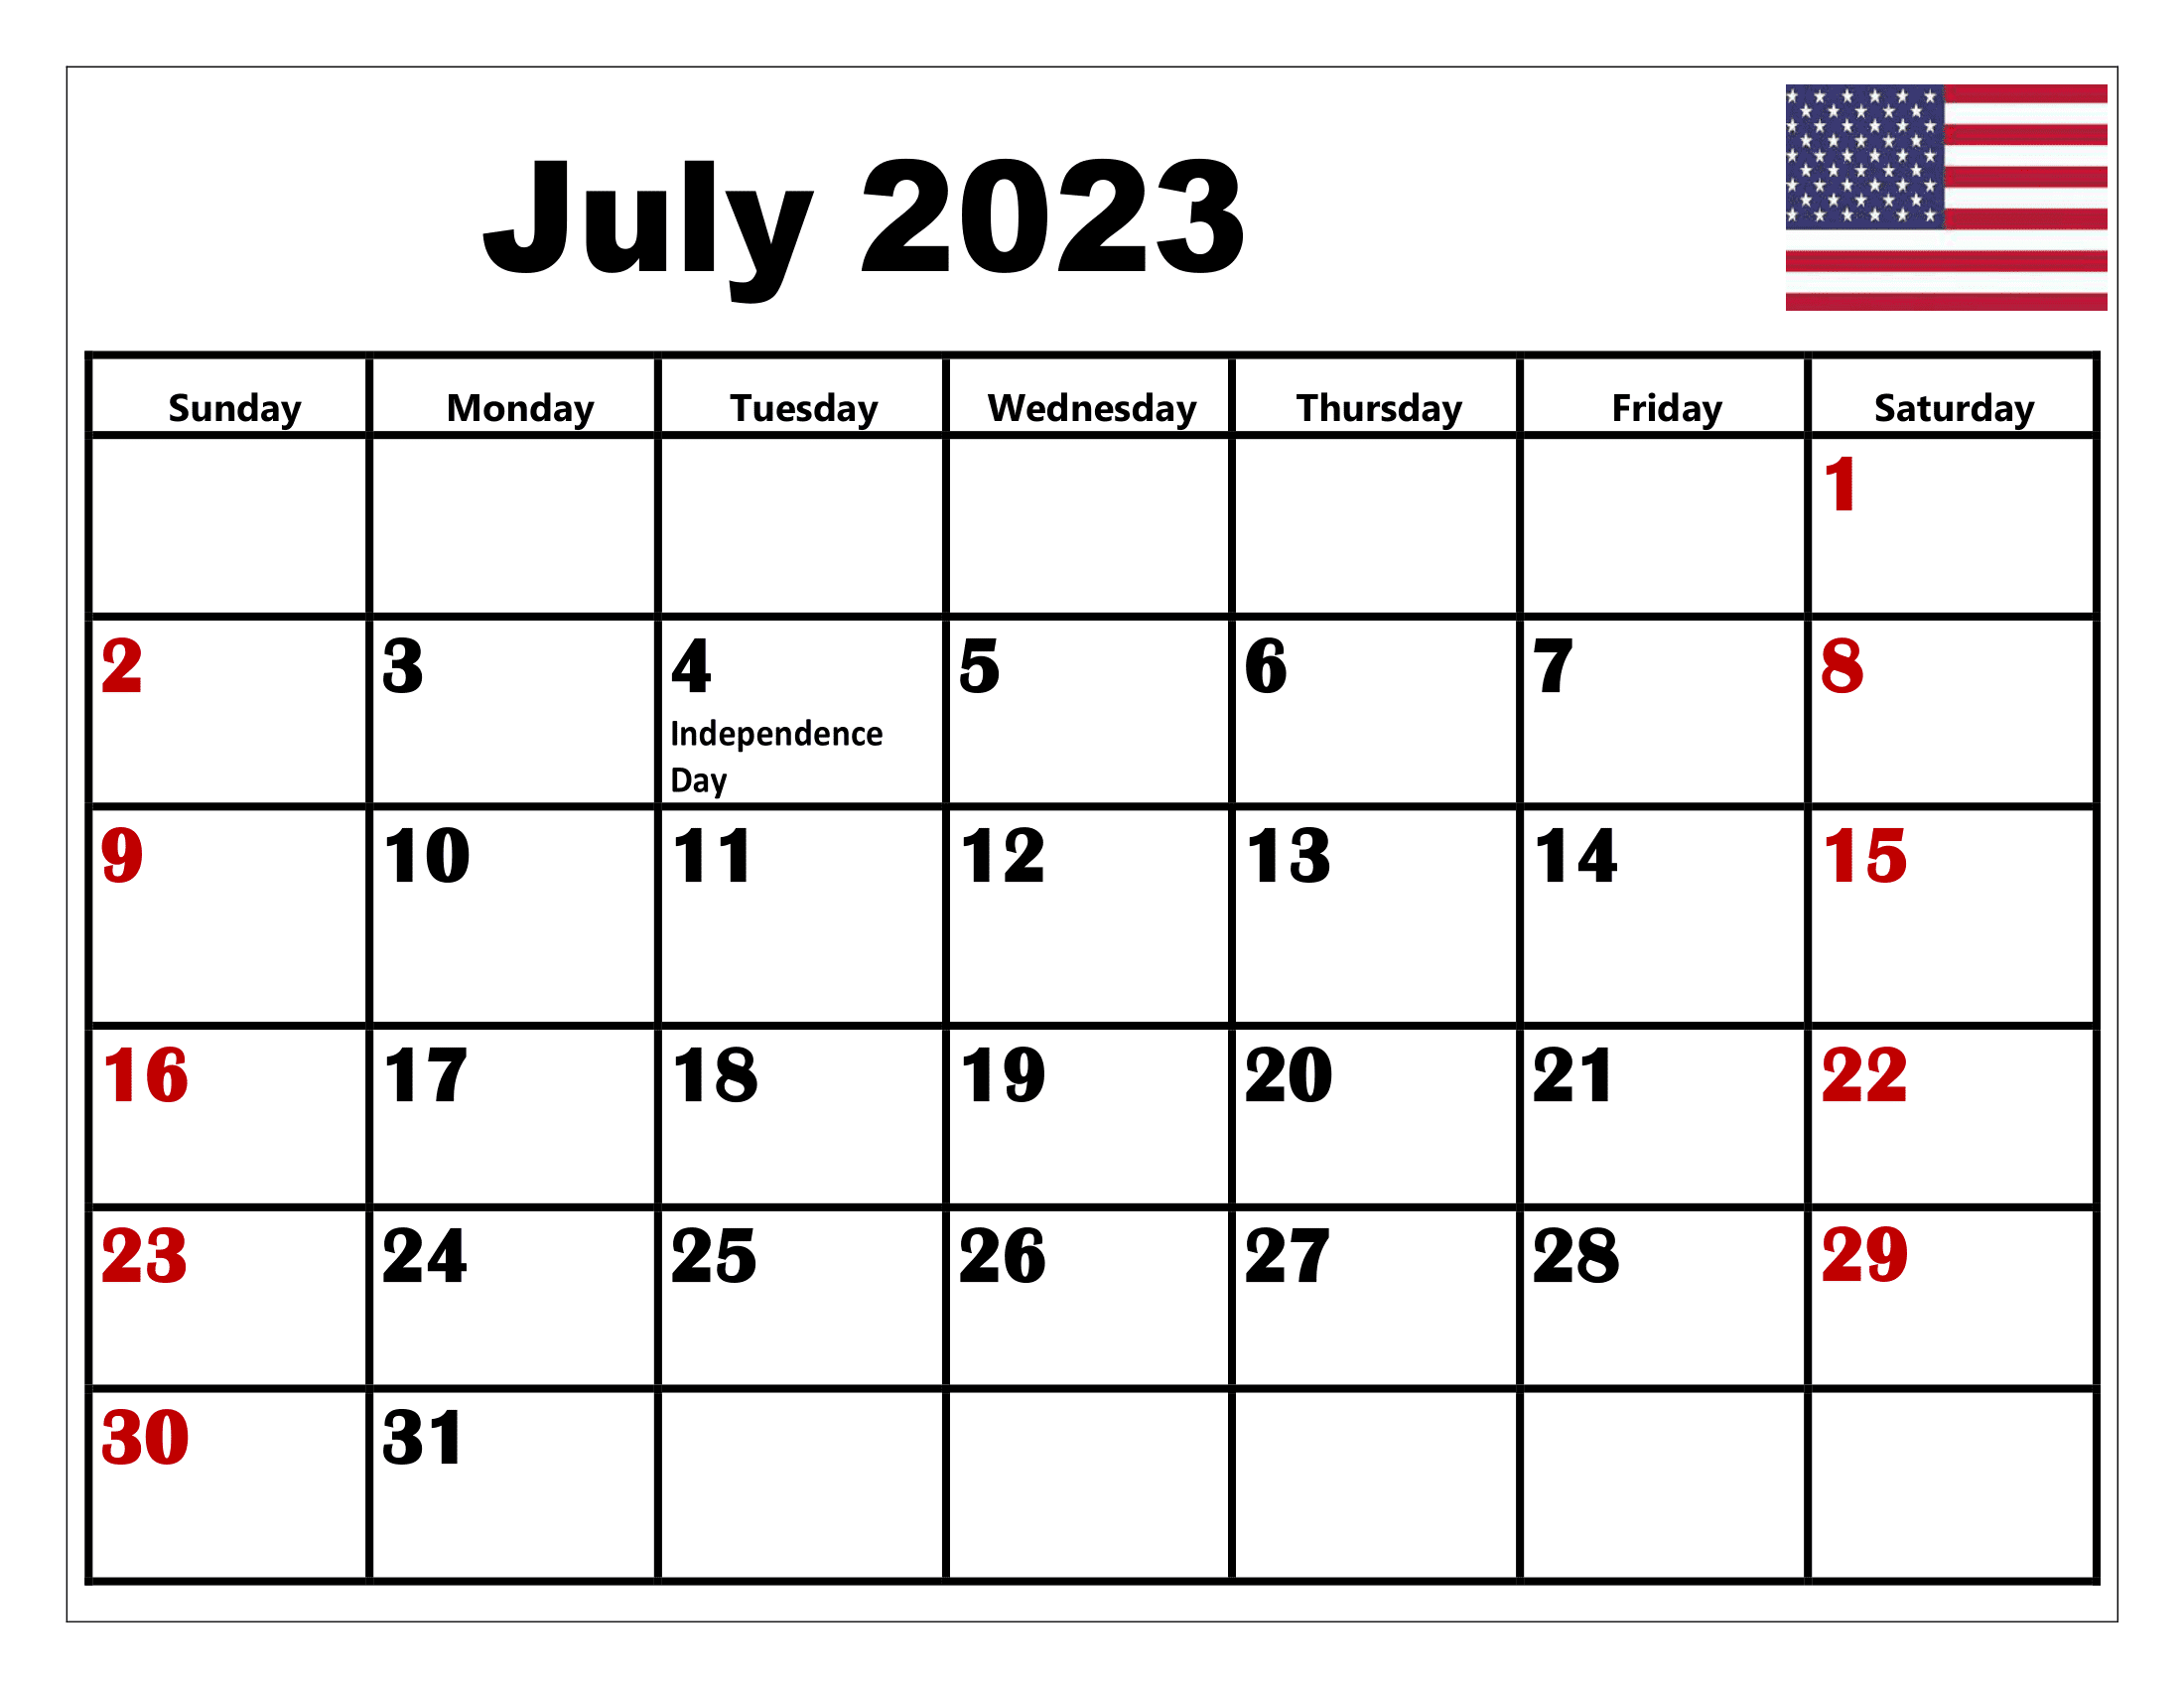 June, 2023